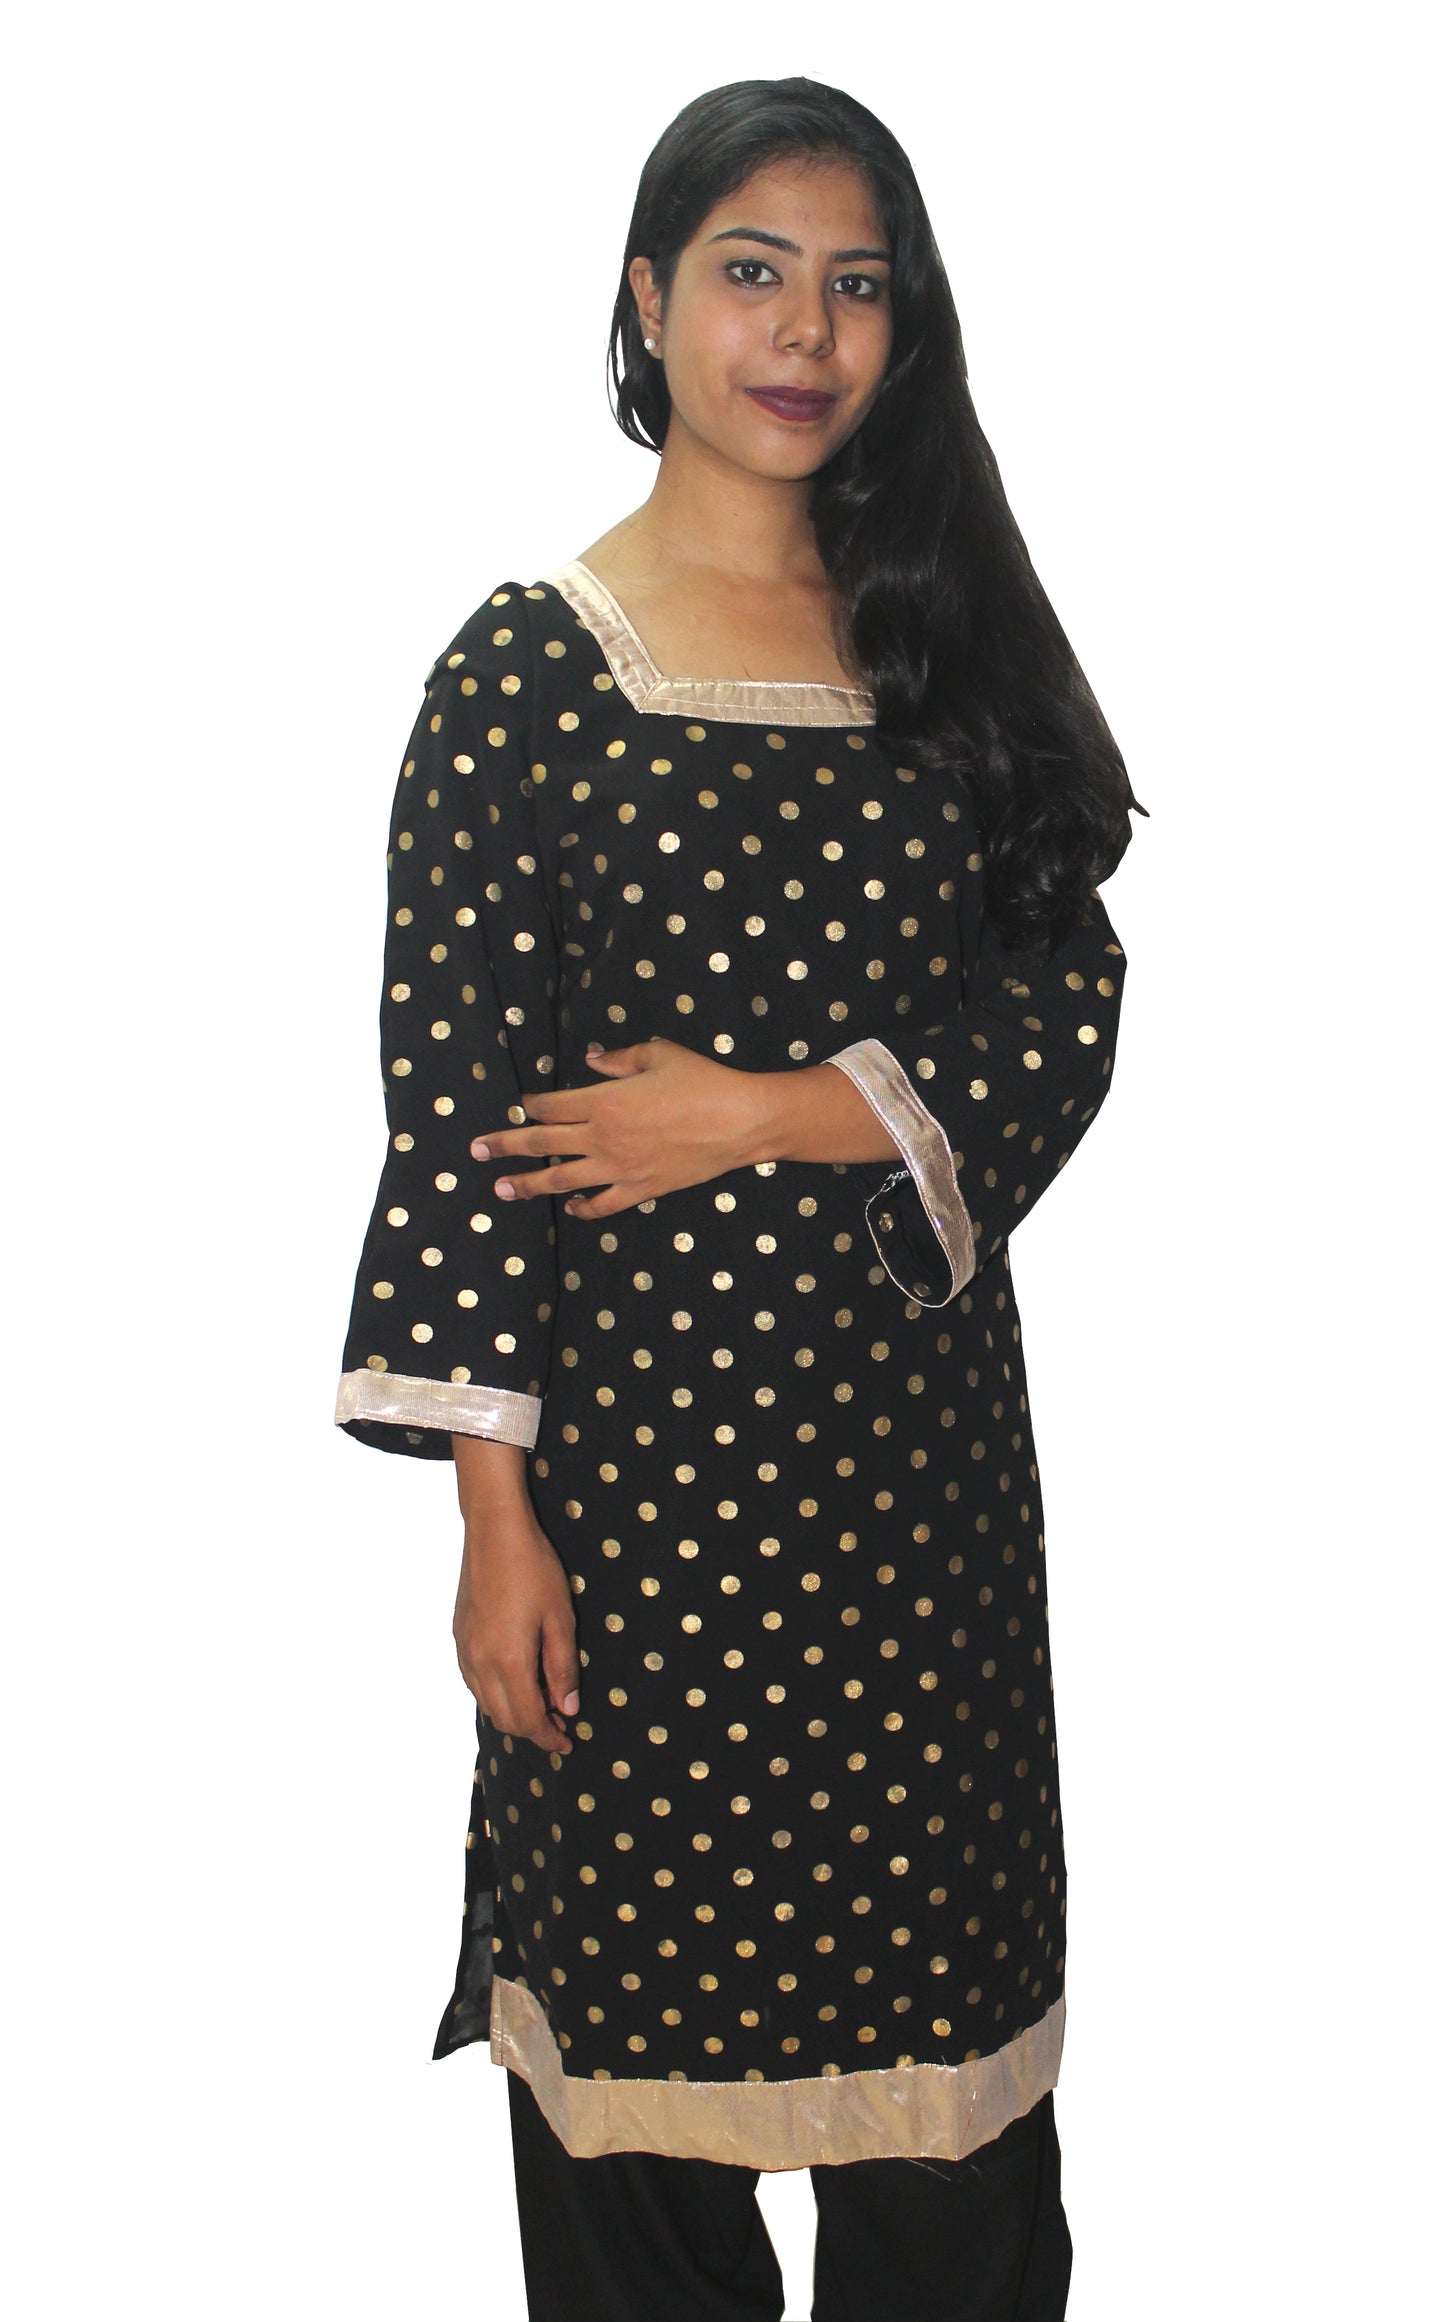 Black Polka dot  Dress Salwar kameez Dress Plus Chest Size 48